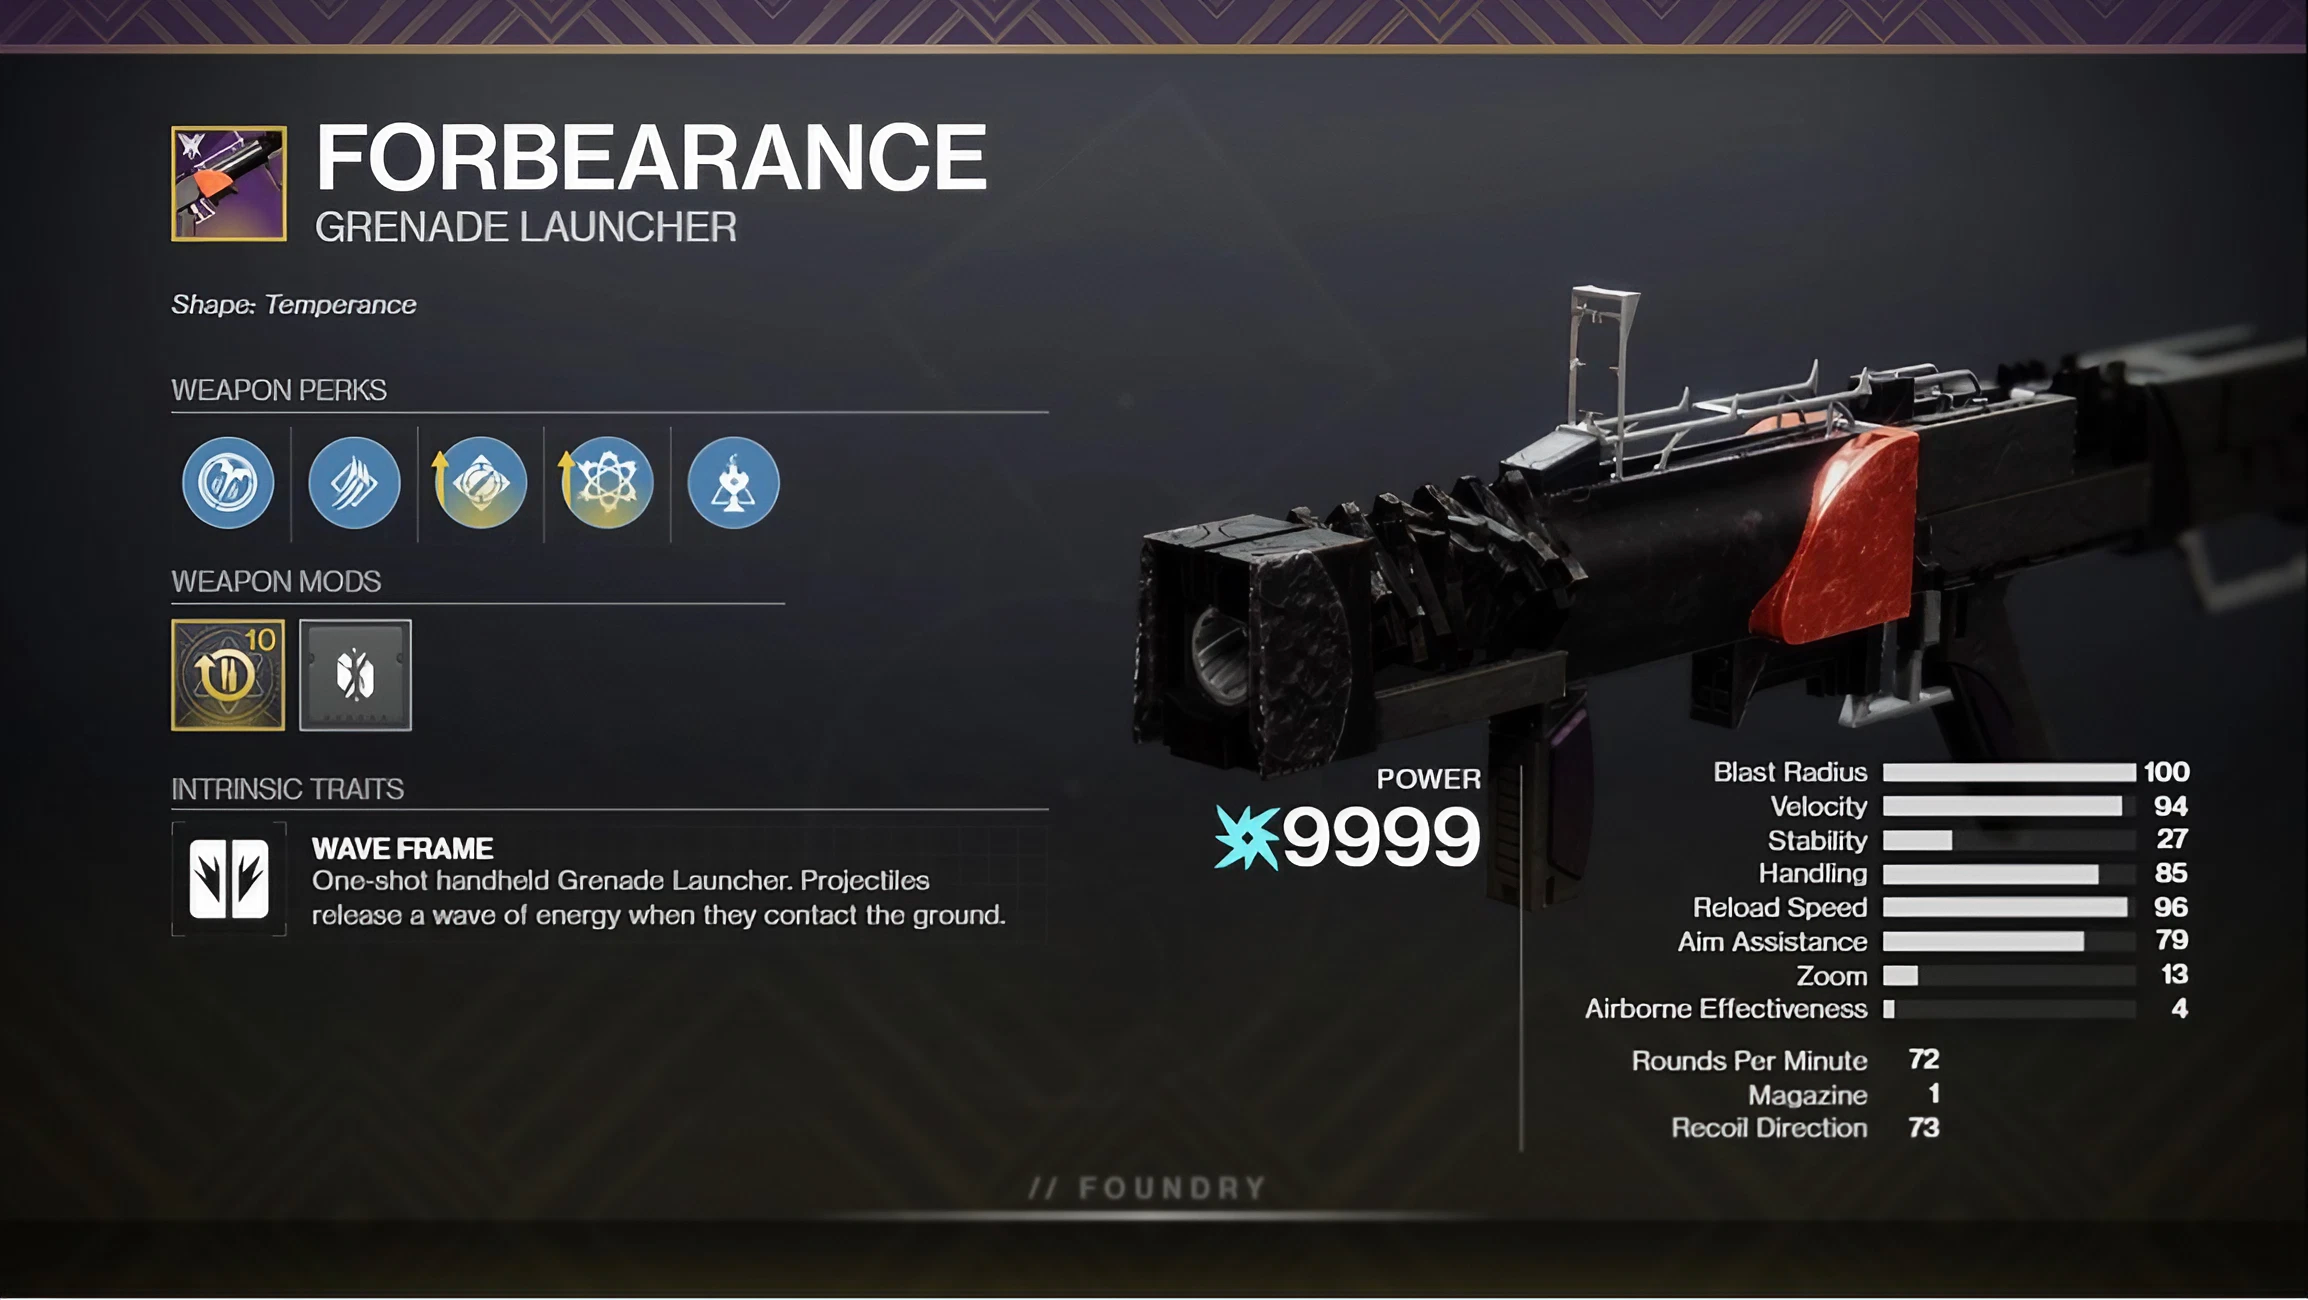 Forbearance Grenade Launcher